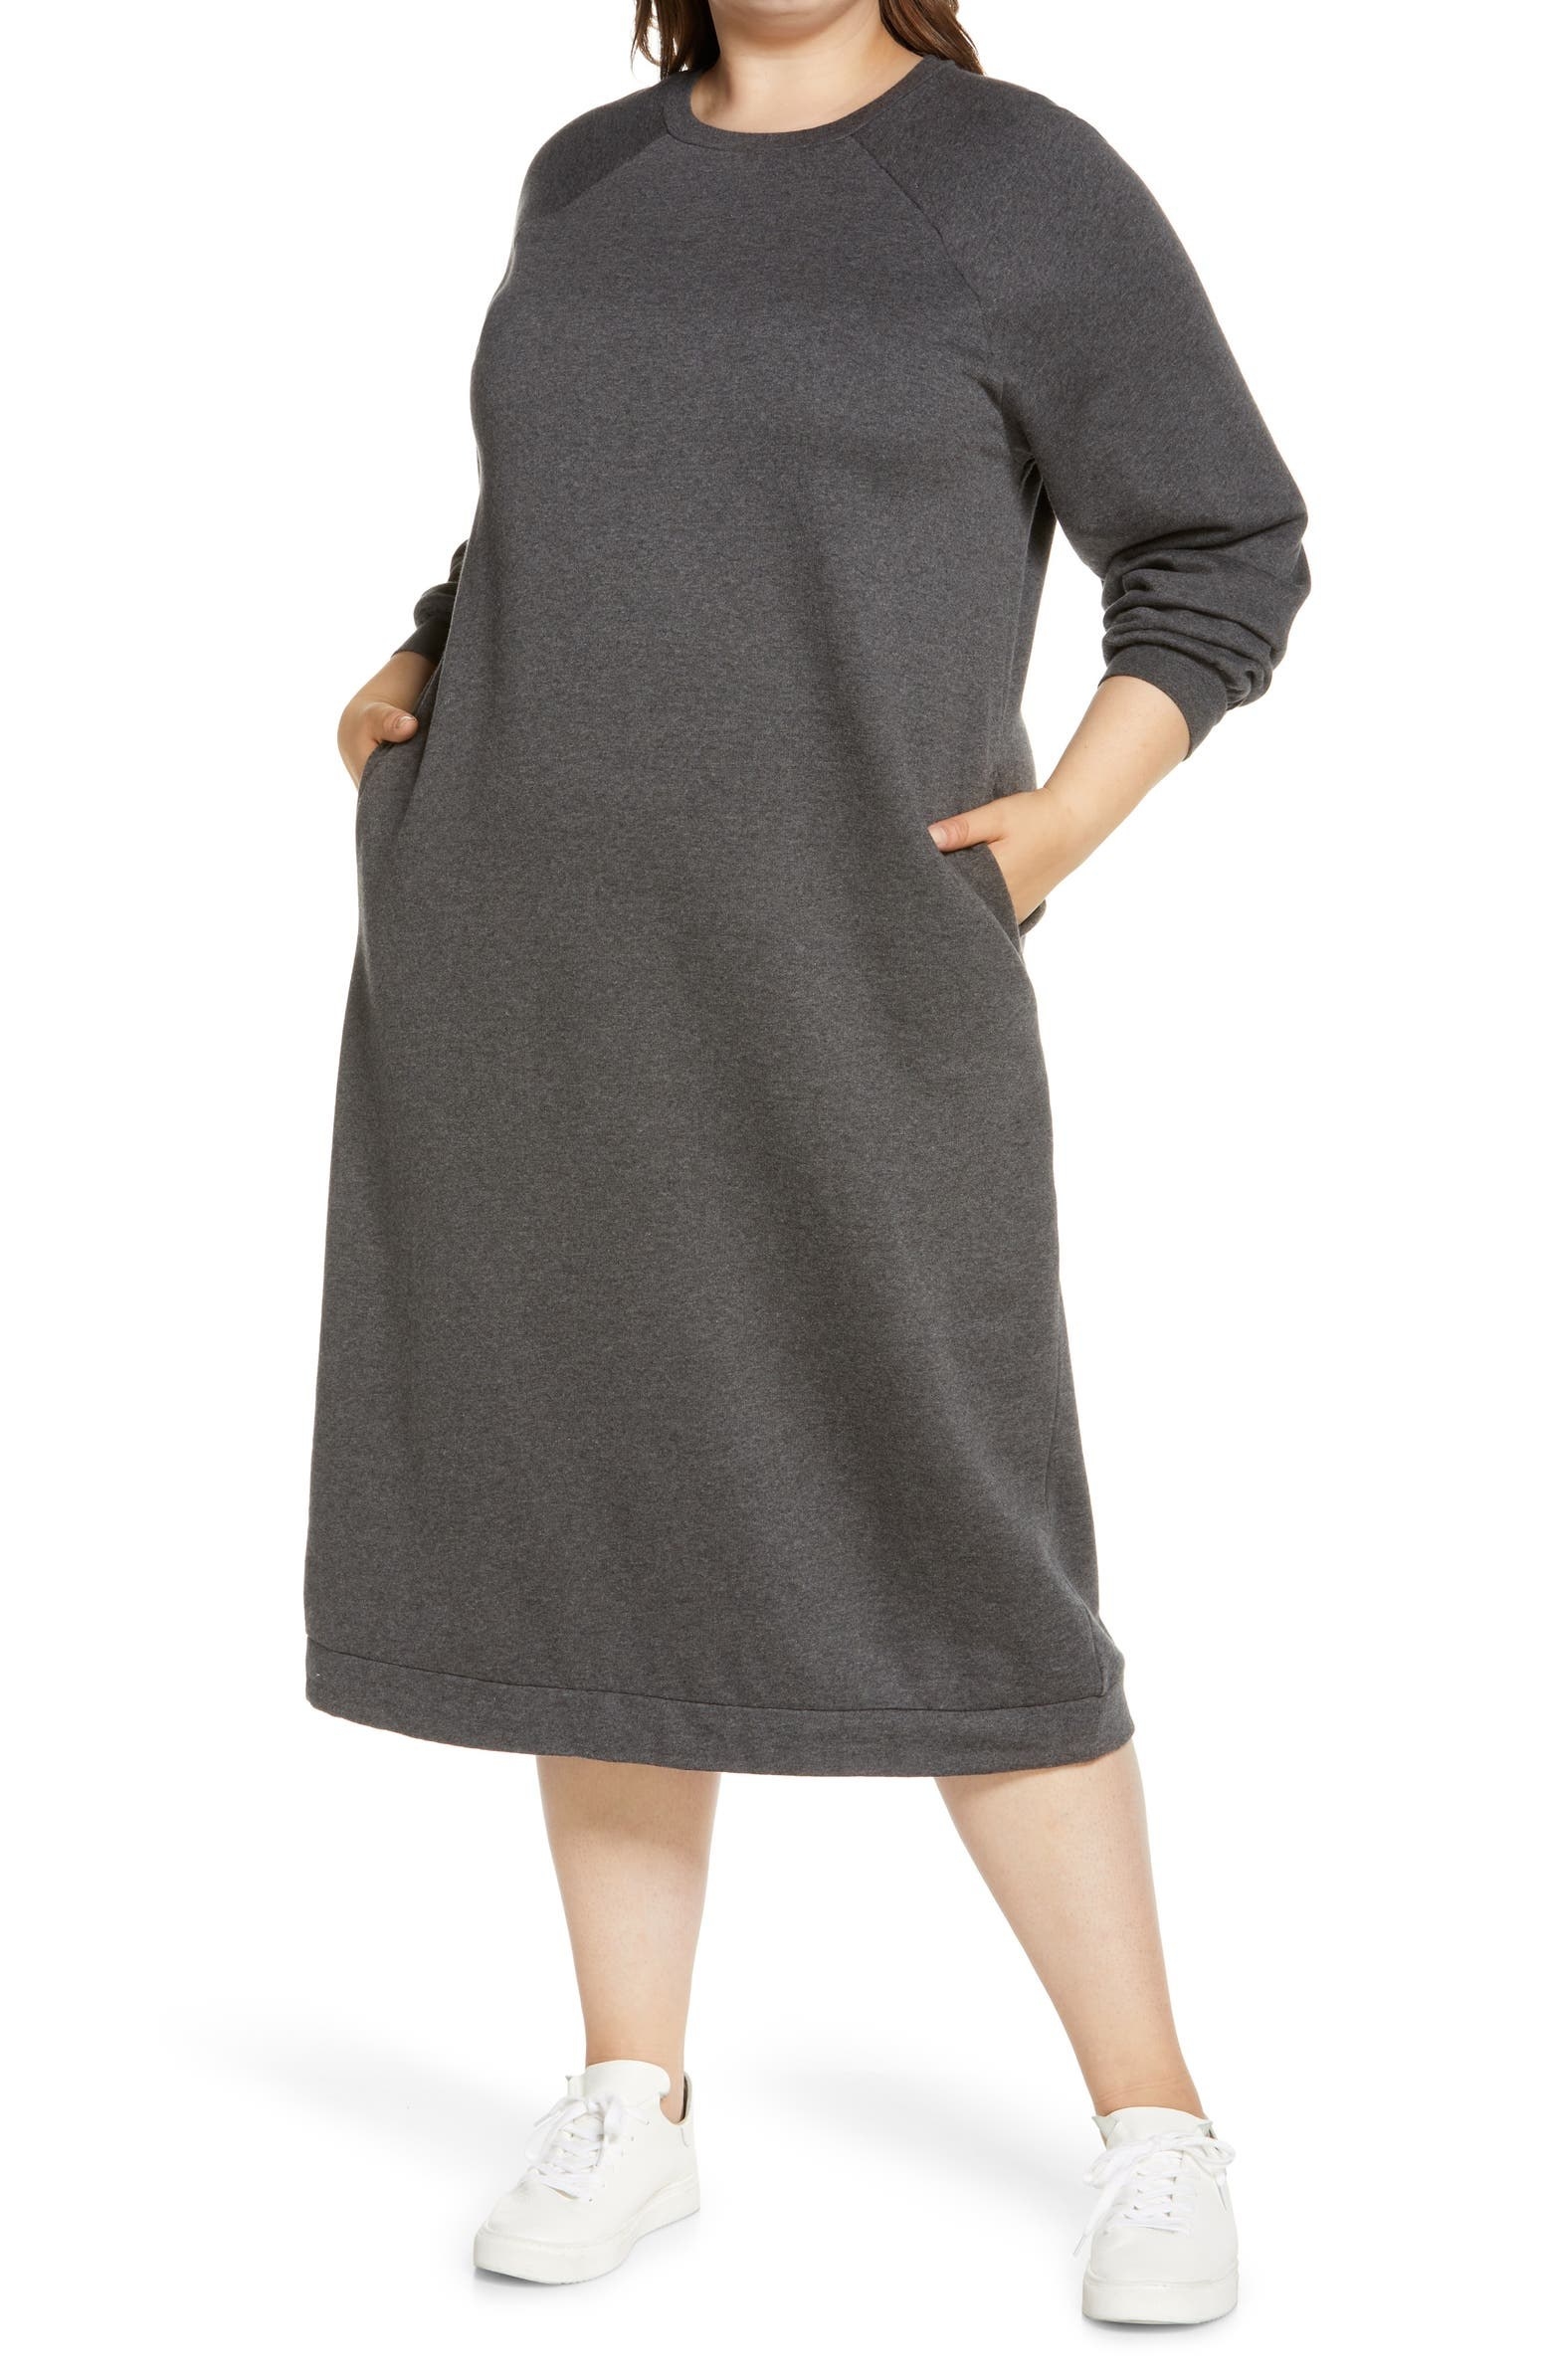 model wearing a midi sweatshirt dress that&#x27;s roomy